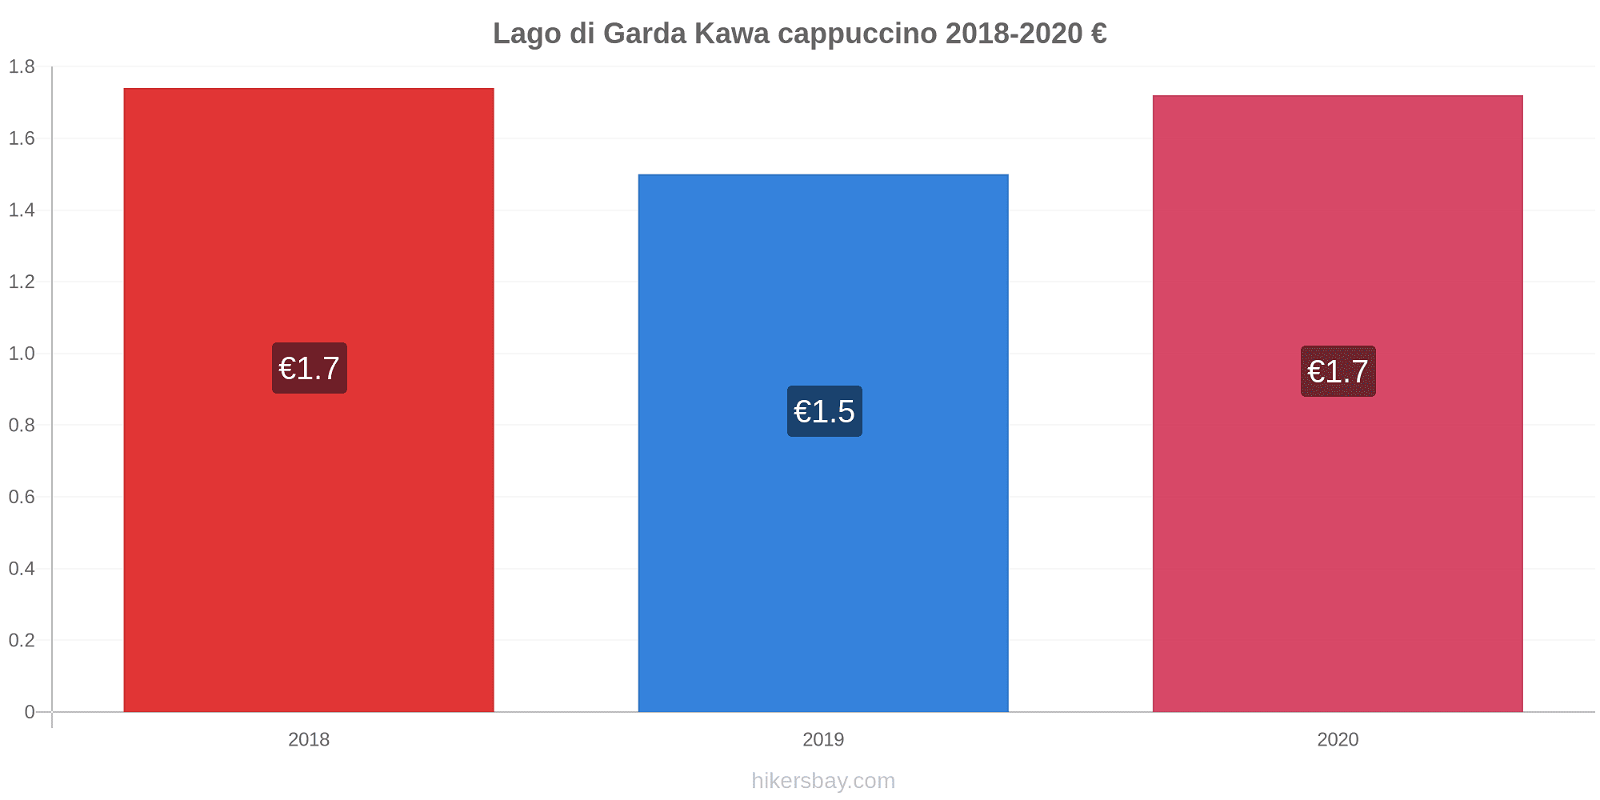 Lago di Garda zmiany cen Kawa cappuccino hikersbay.com